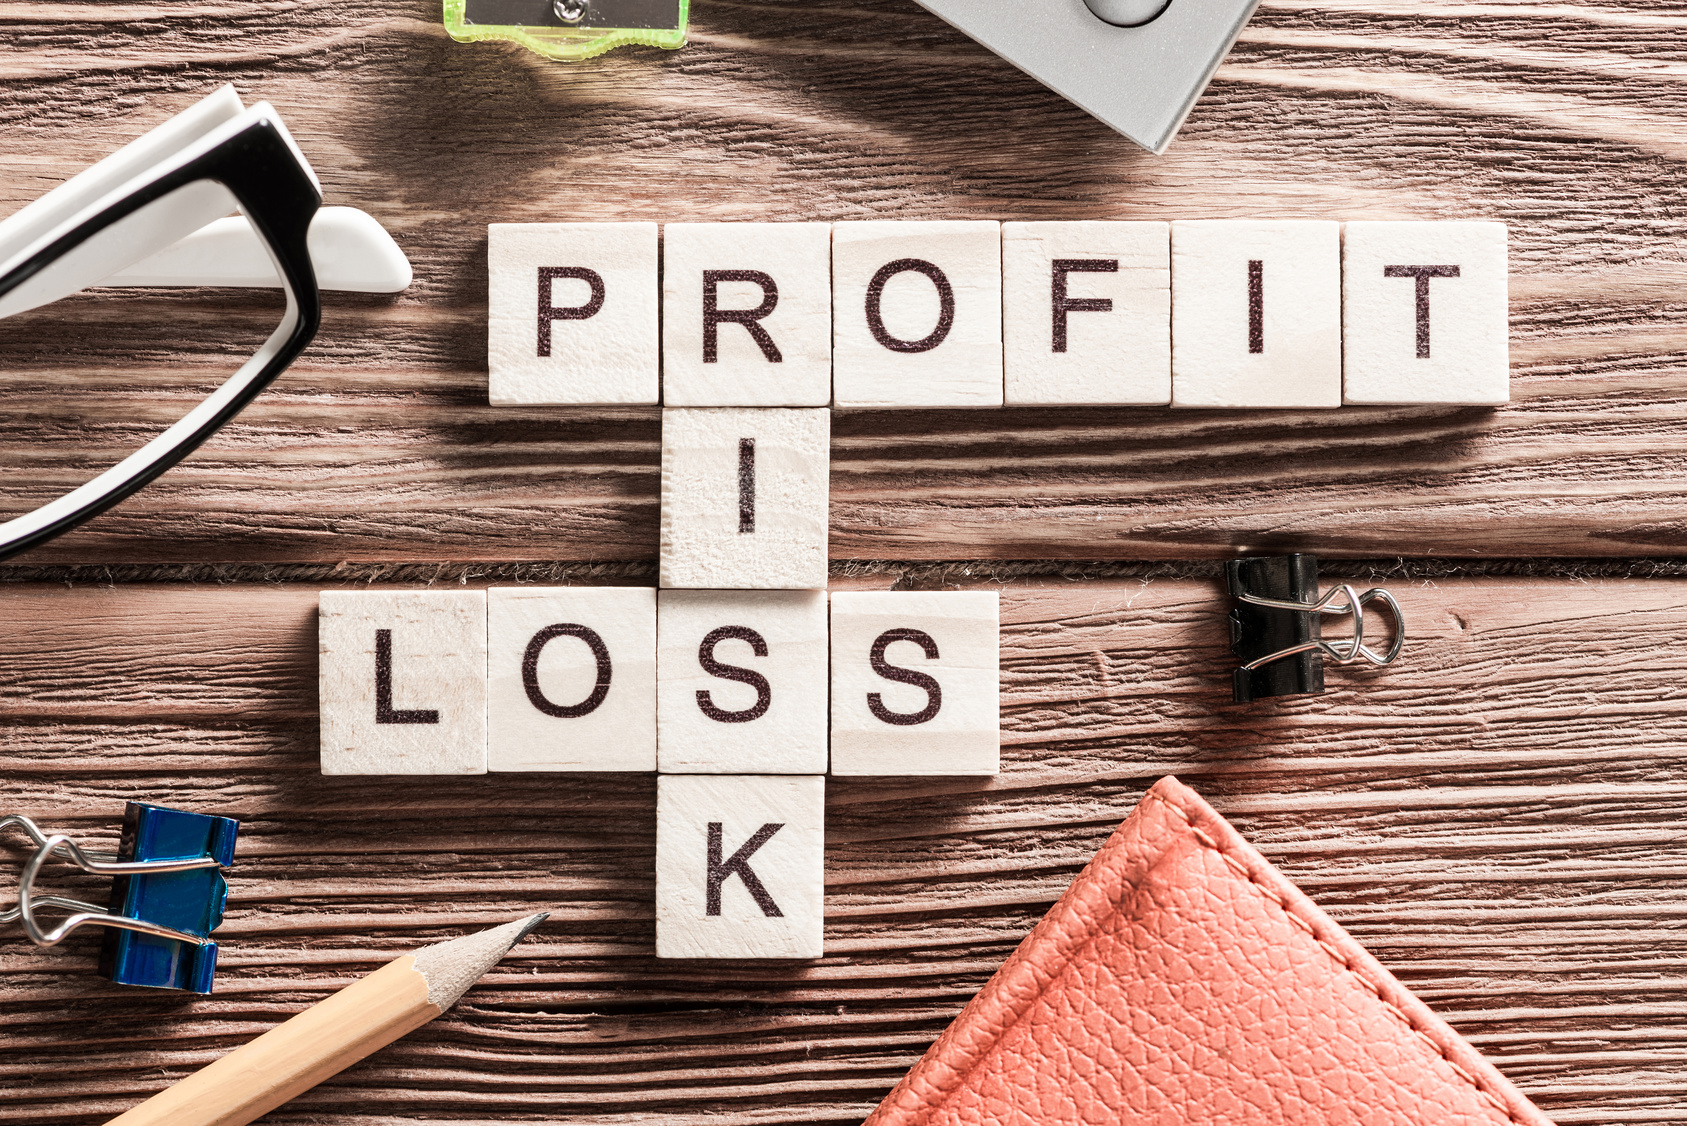 Profit, loss, and risk in letter tiles on cluttered desk